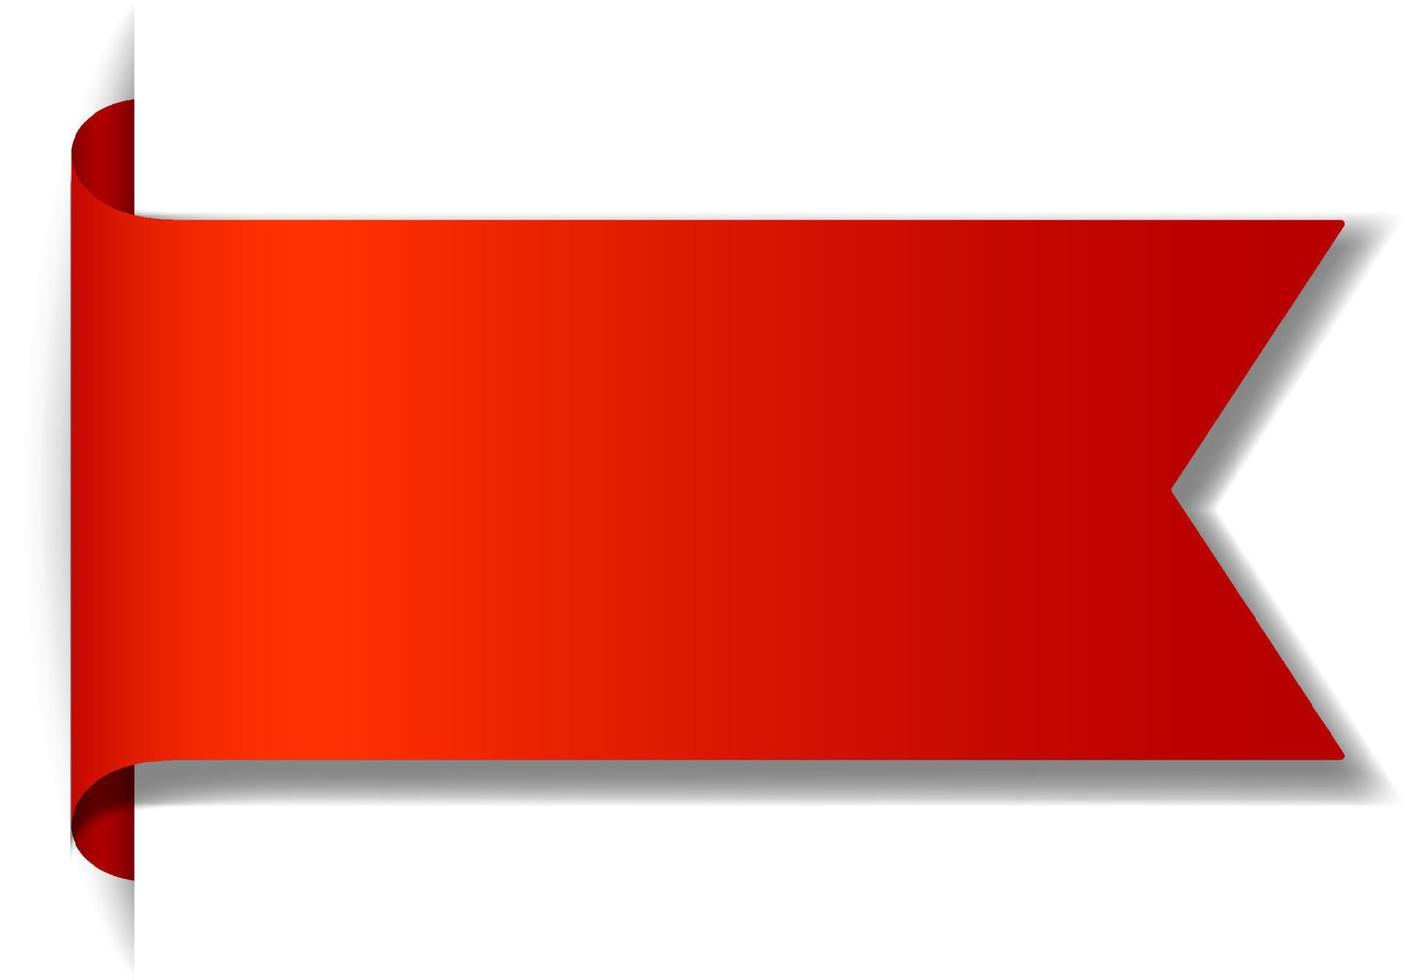 Red banner design on white background vector